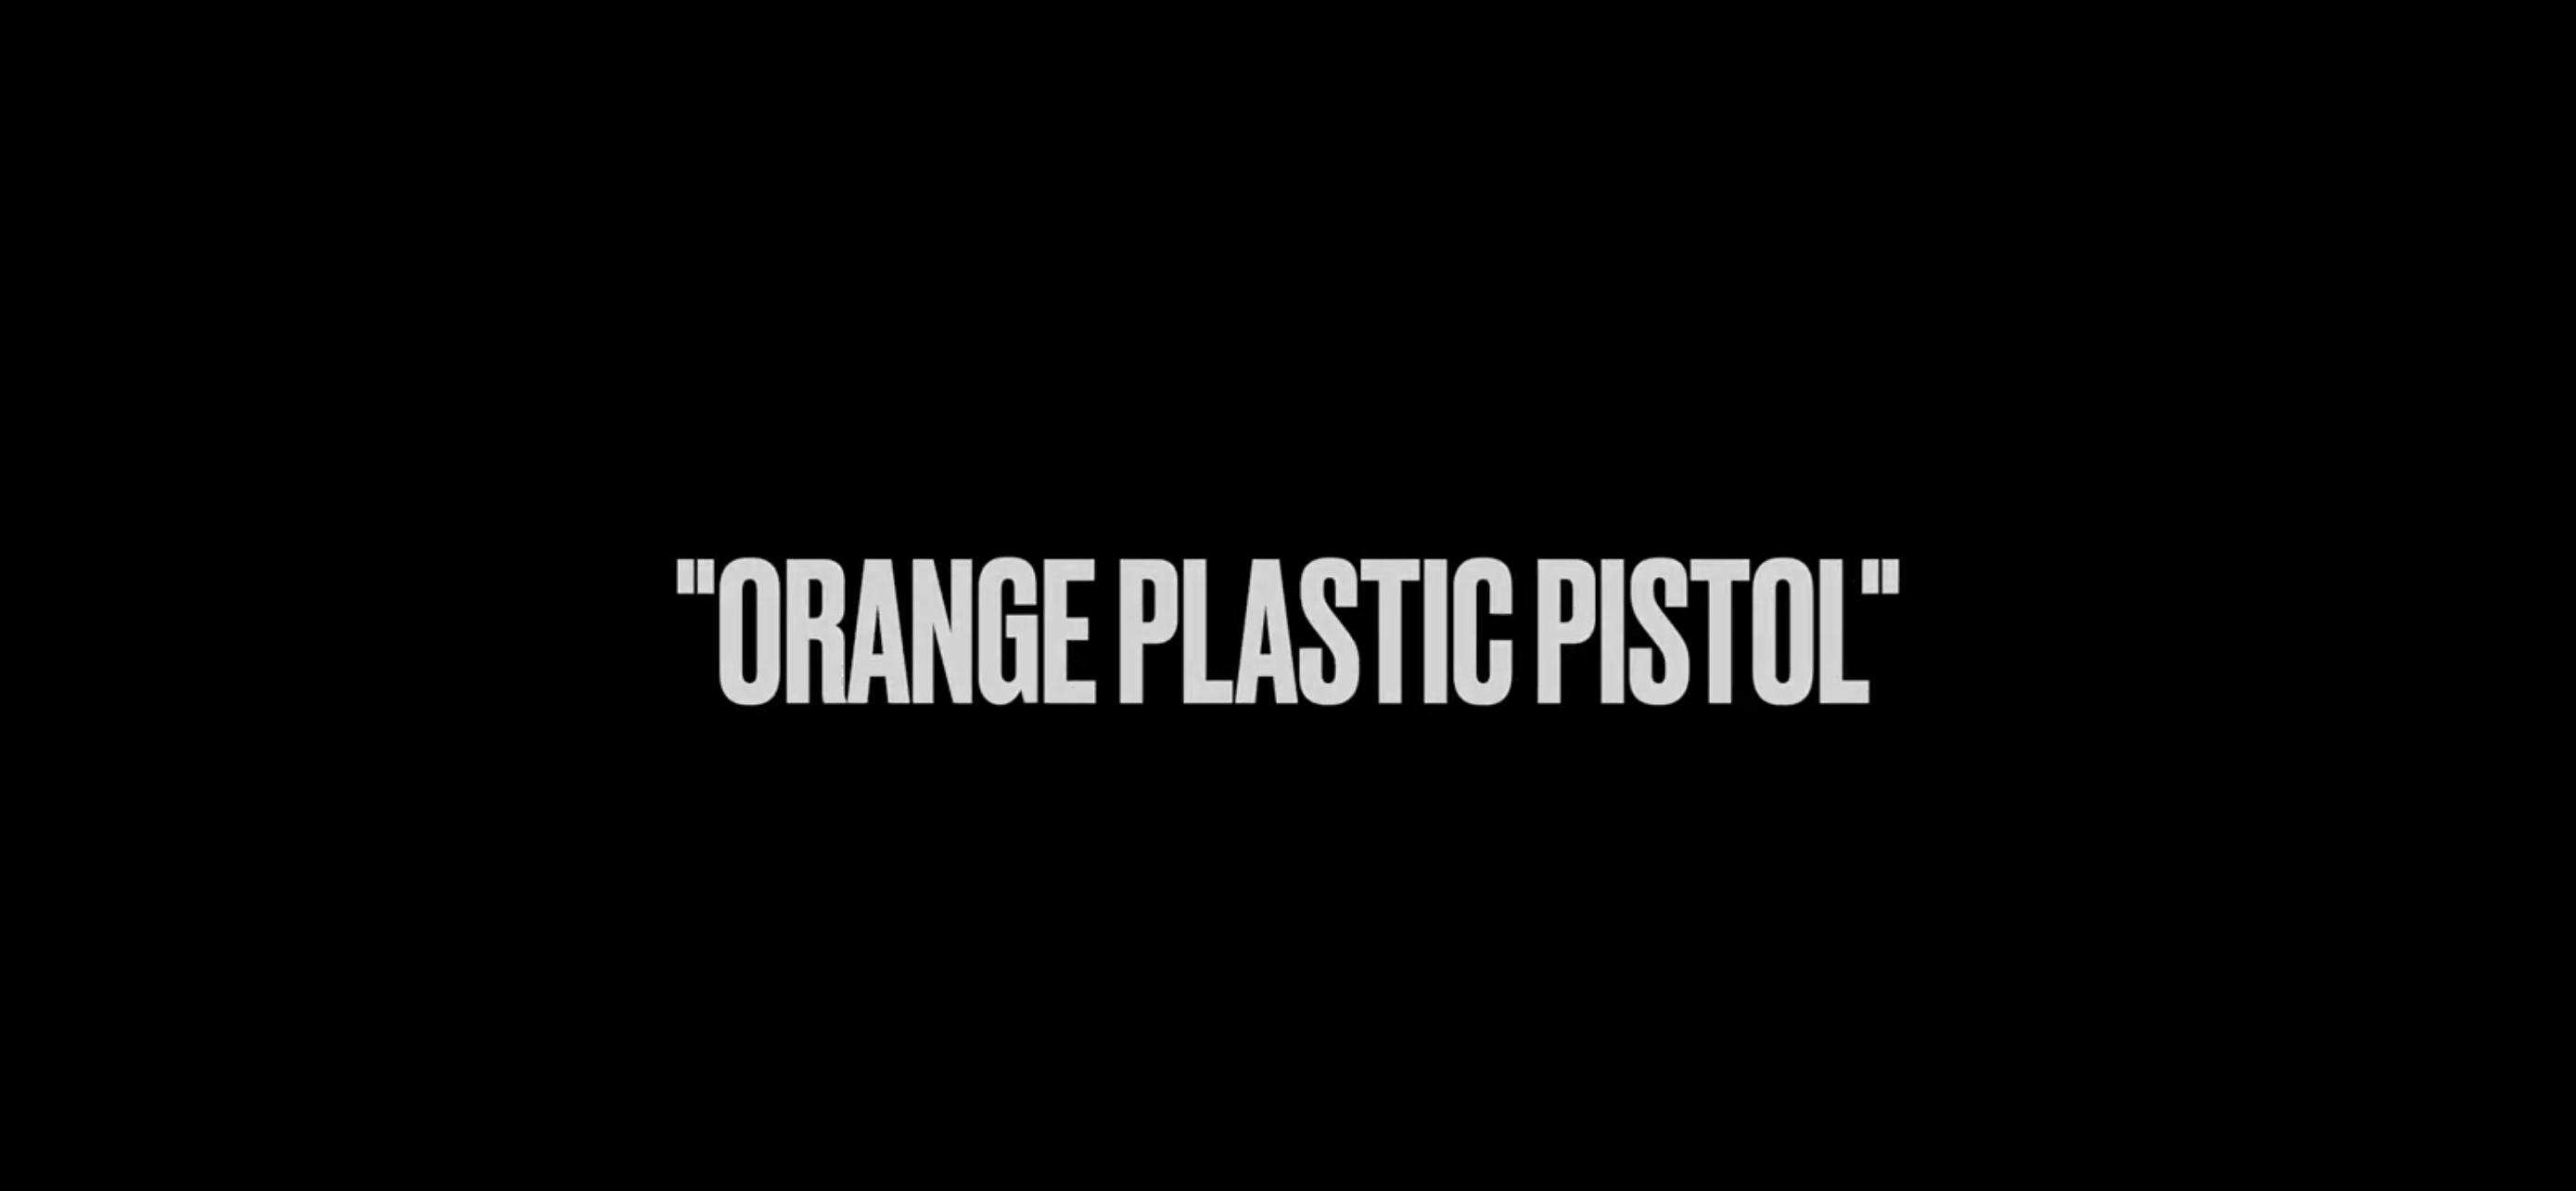 andrew - "Orange Plastic Pistol" promo video